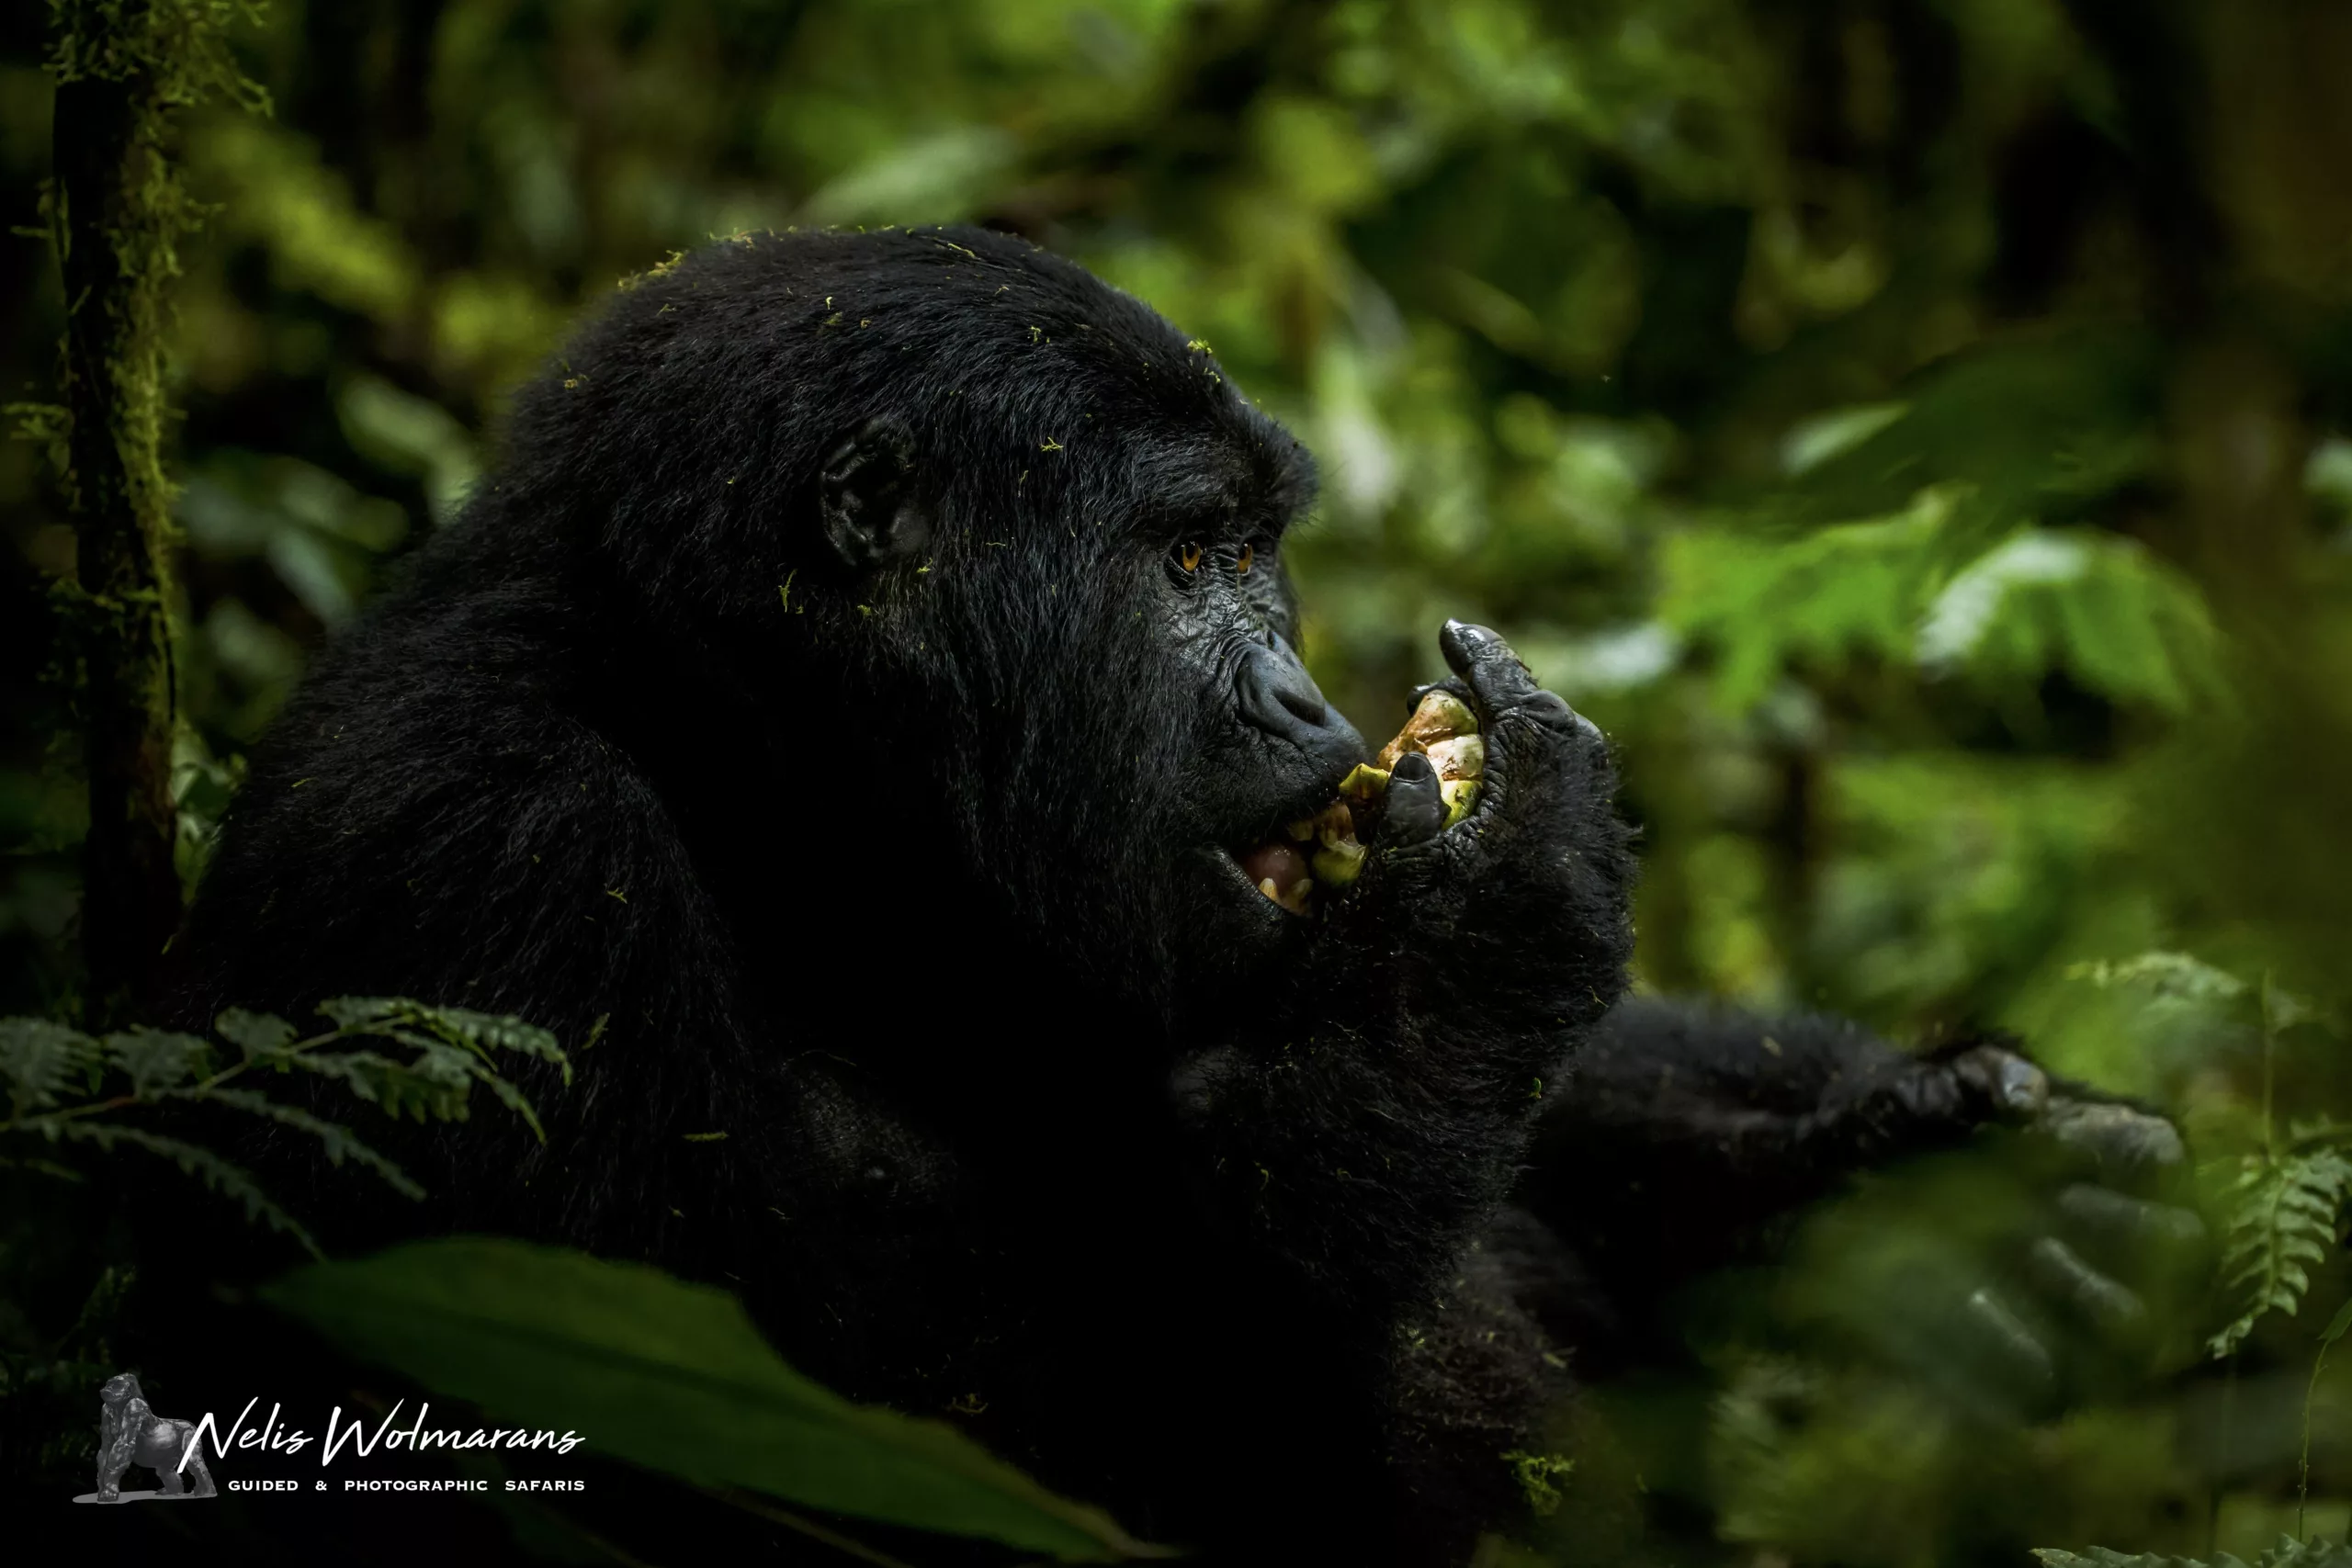 Uganda primate safari nelis wolmarans x pangolin gorilla eating